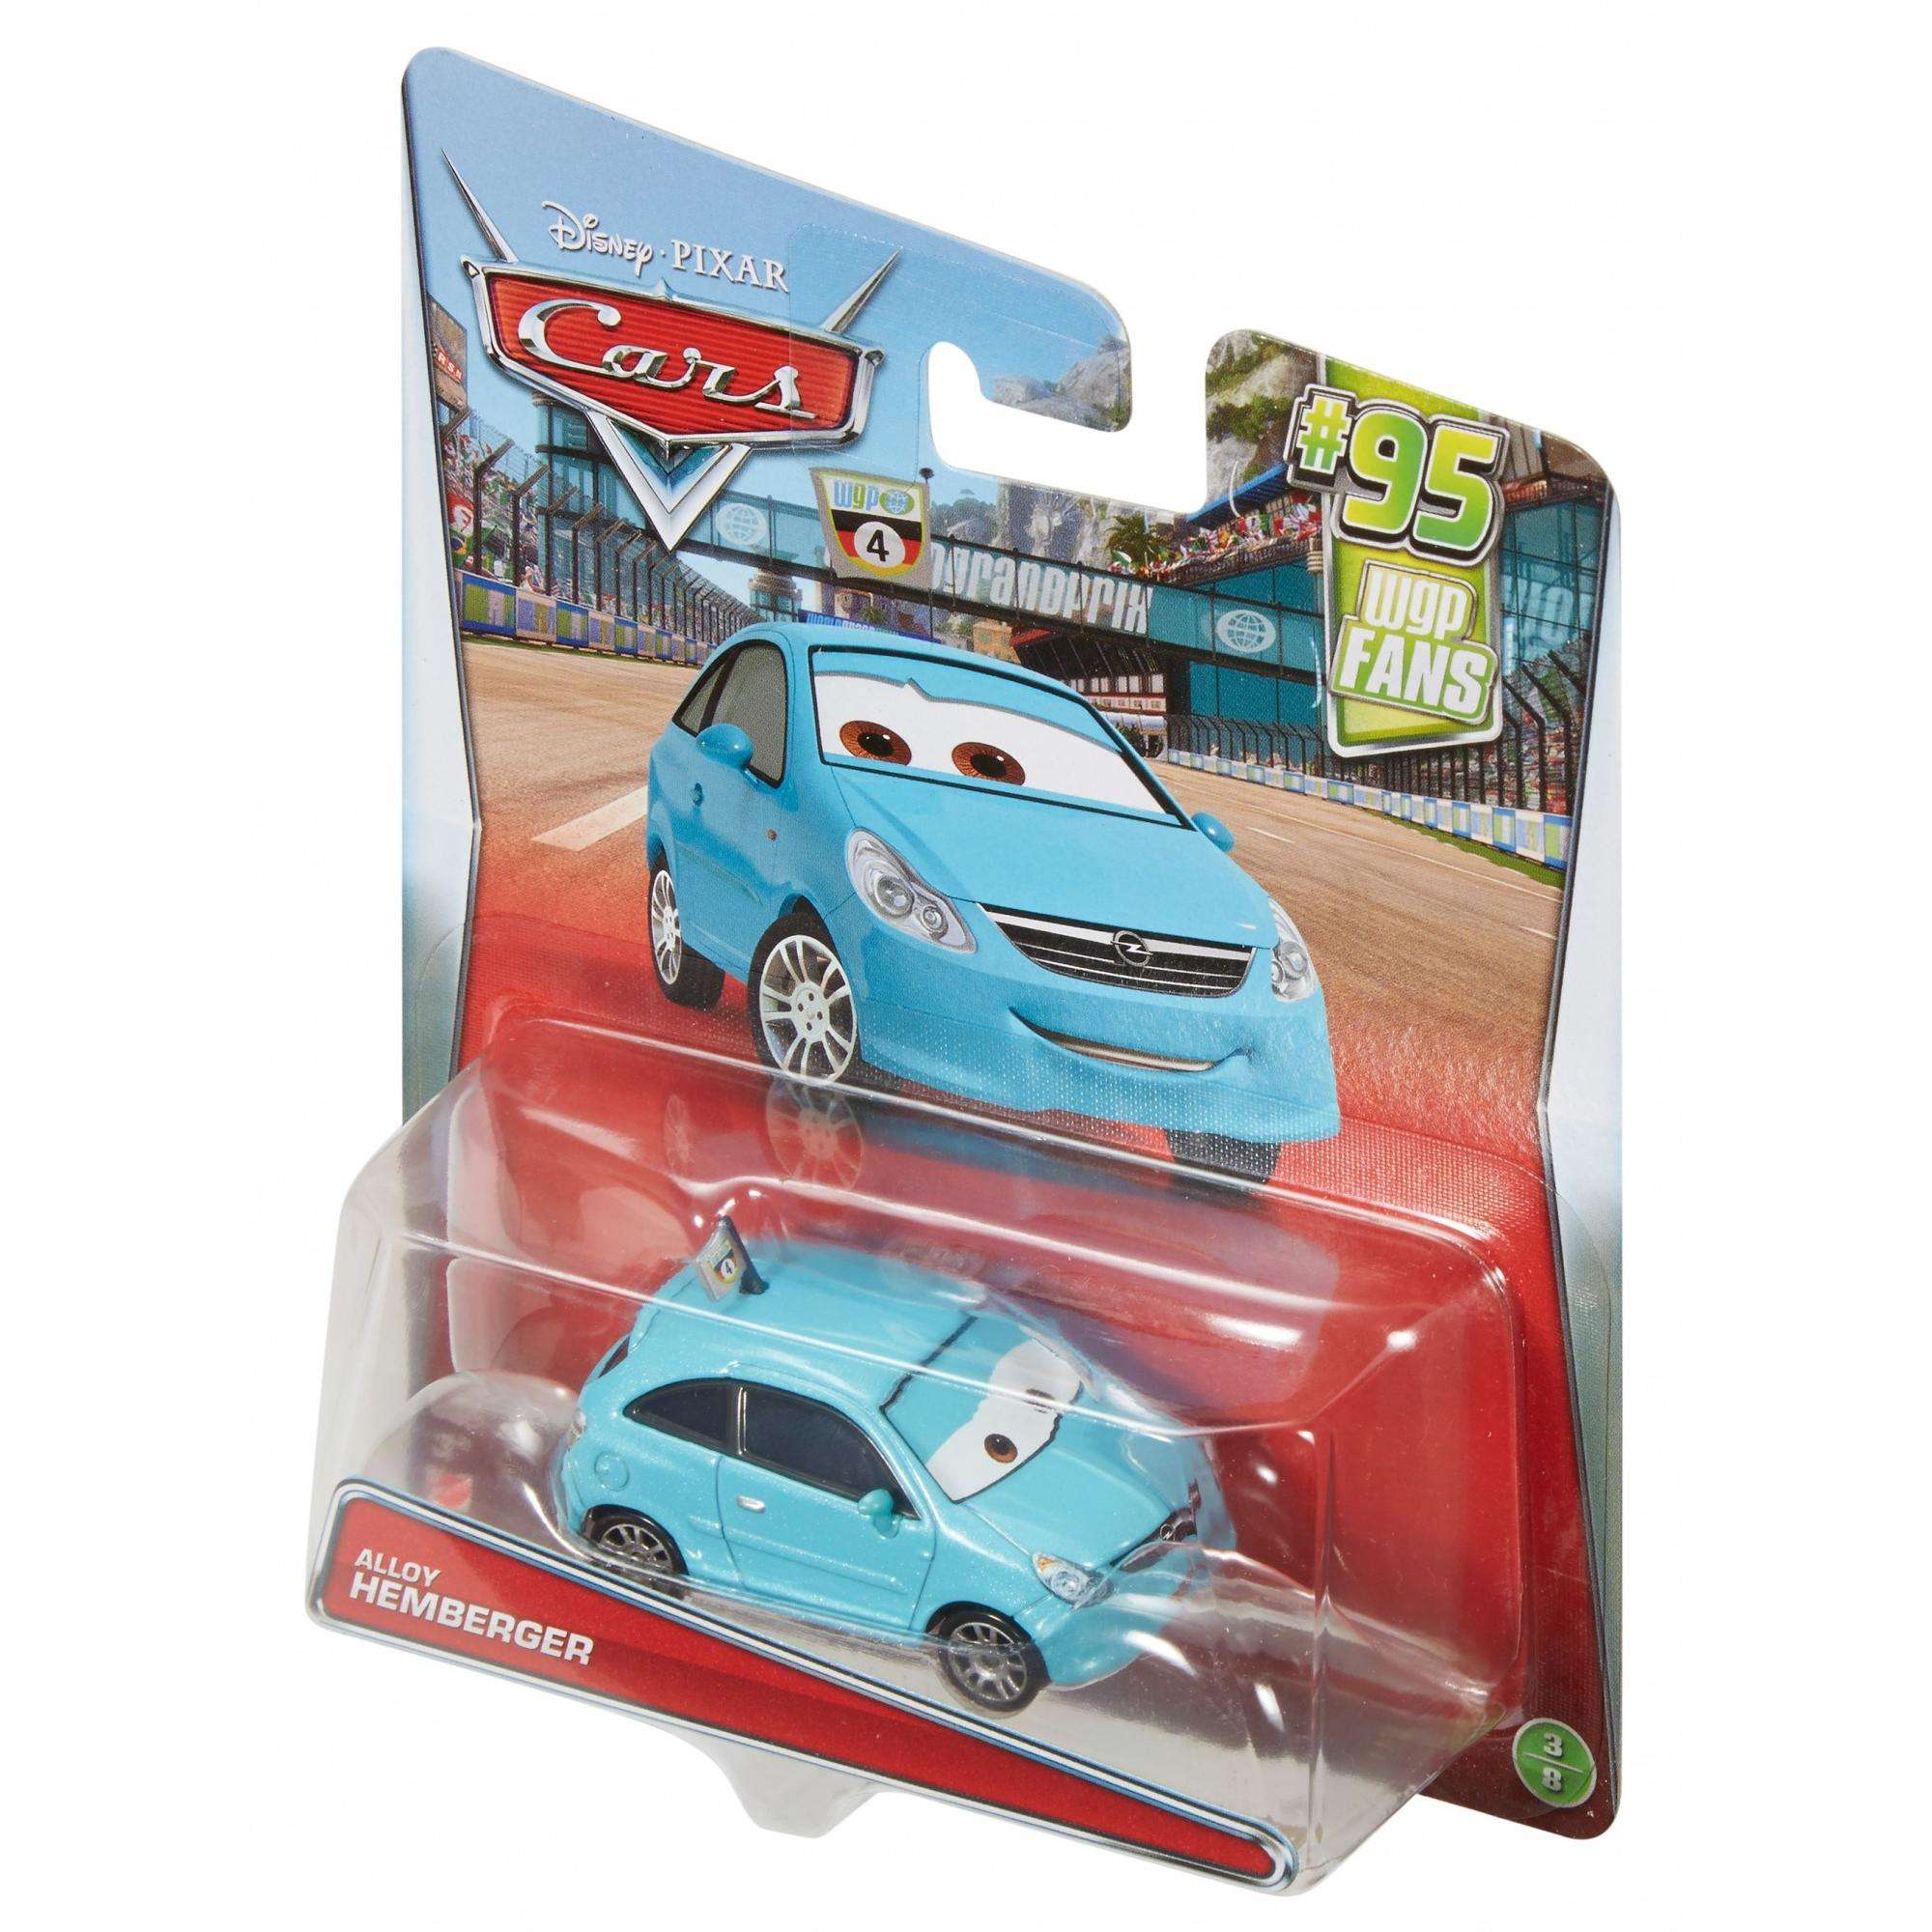 Disney/Pixar Cars Alloy Hemberger Die-Cast Character Vehicle - image 3 of 3